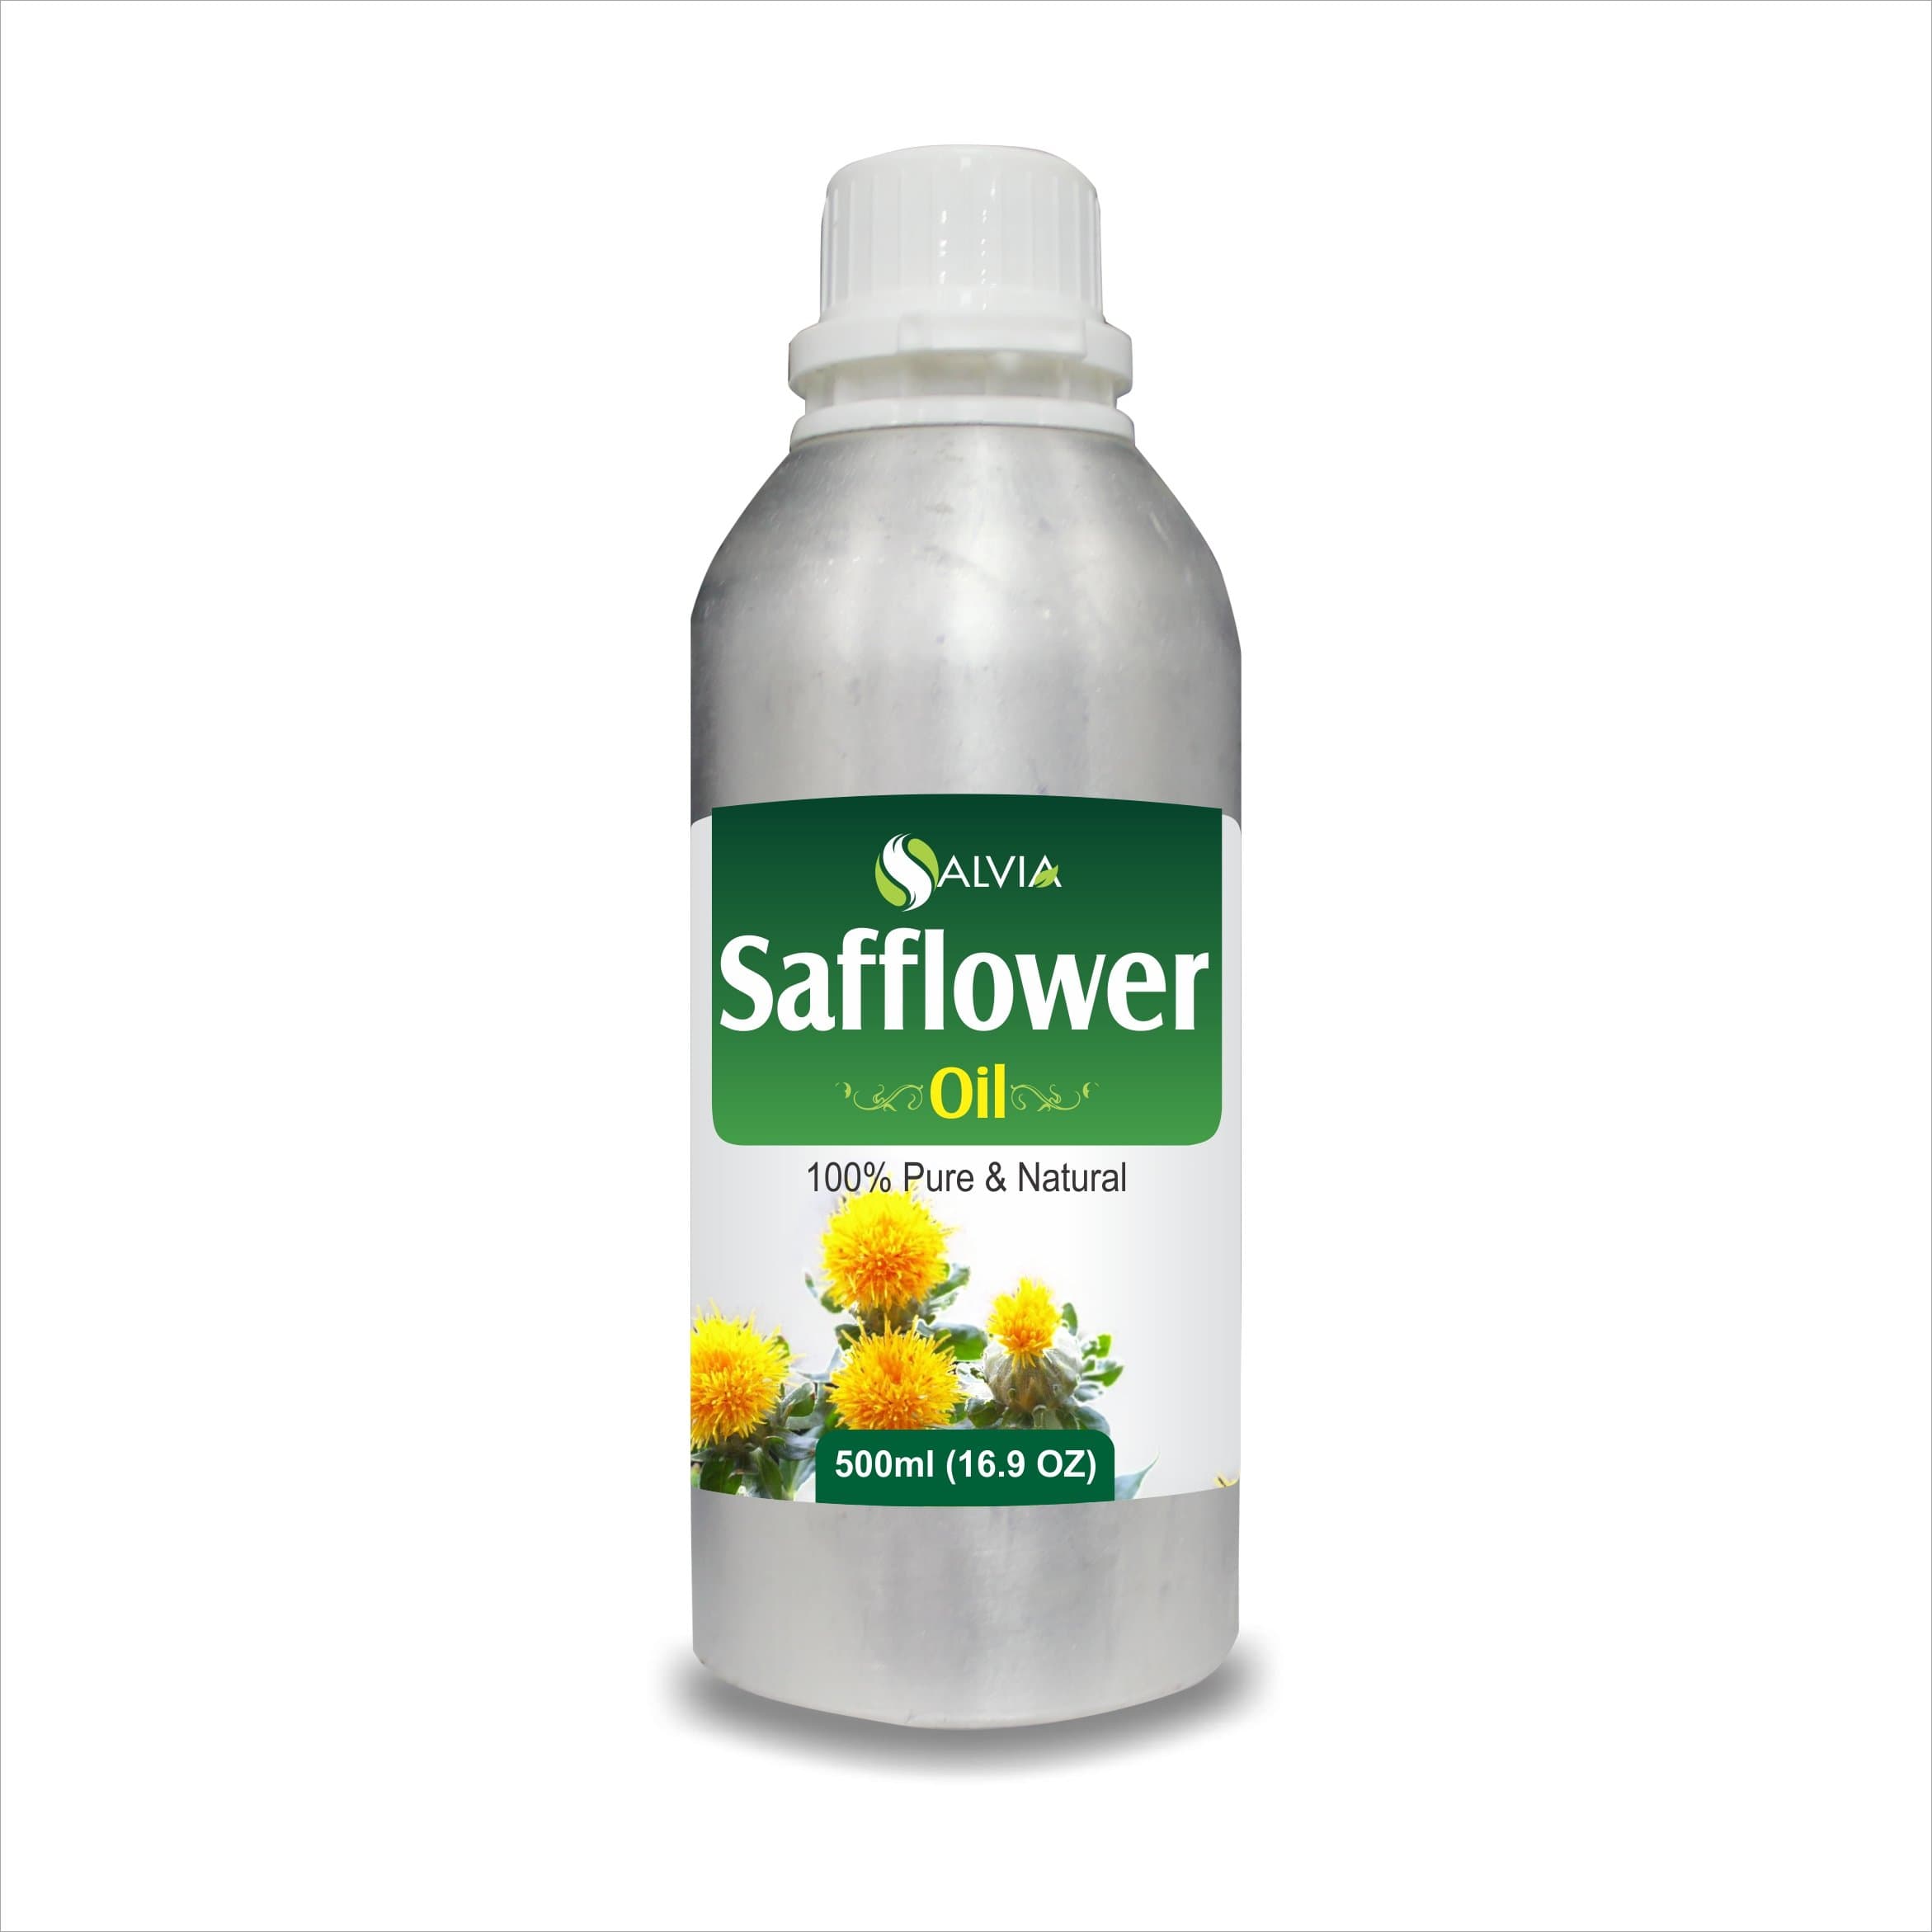 Shop Natural Pigments - Safflower Oil, Rublev Colours Safflower Oil